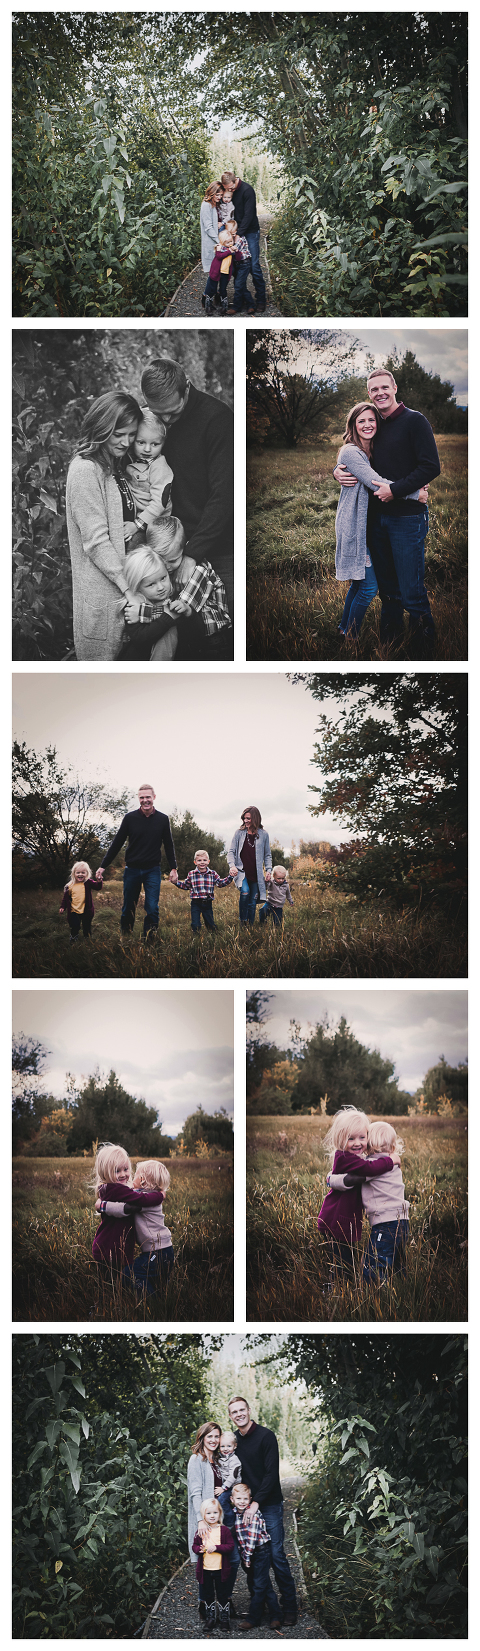 Robertson Family, Lifestyle session captured by Hailey Haberman, Ellensburg, WA